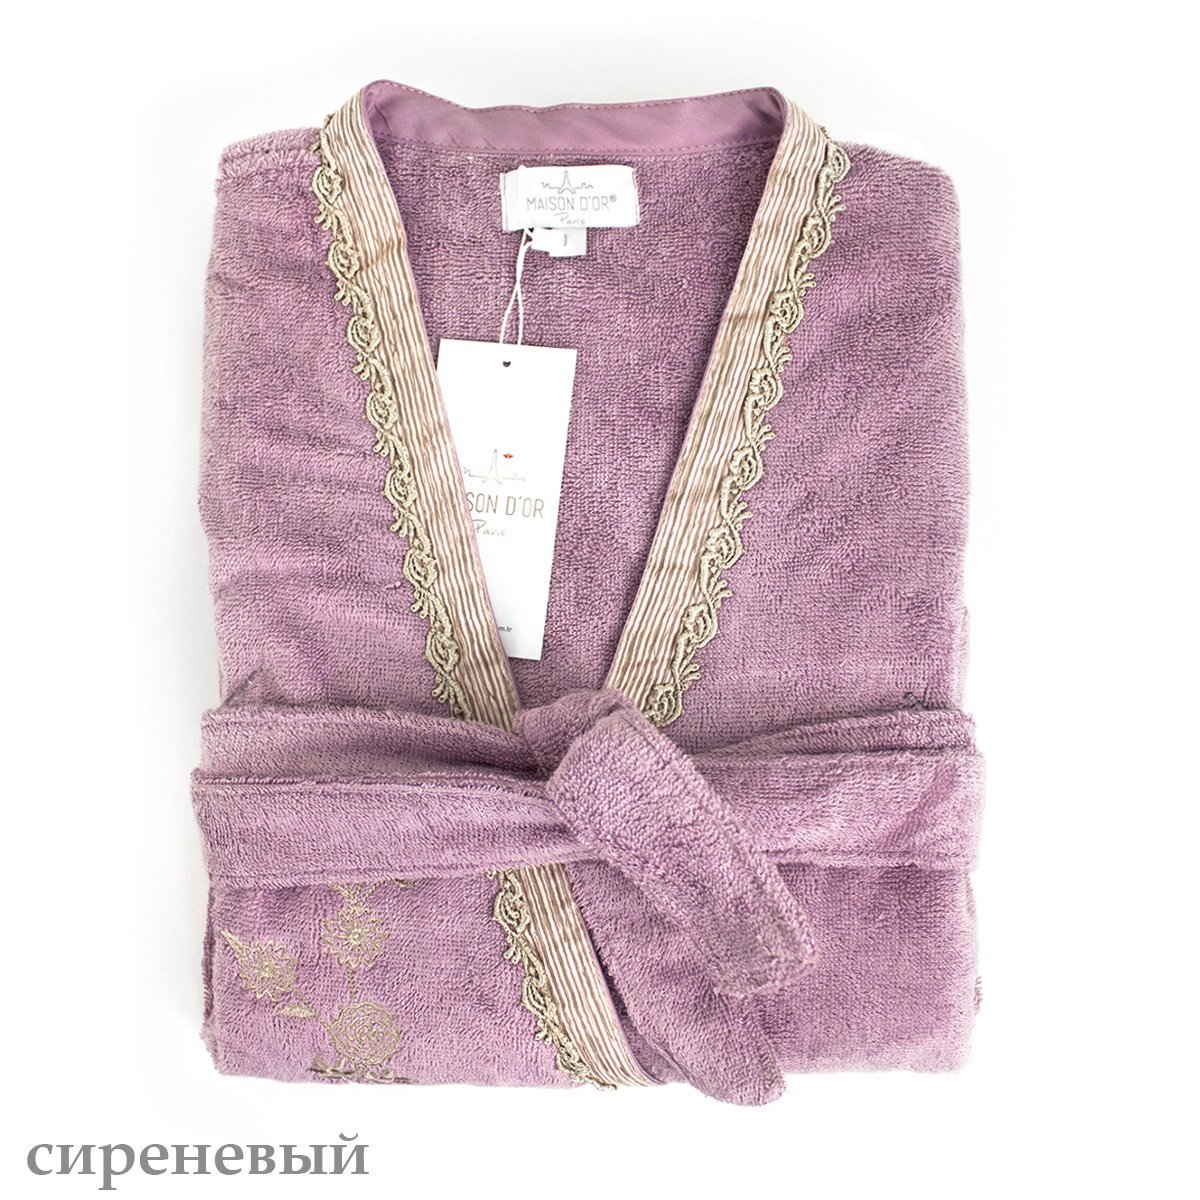 Банный халат Sidney цвет: фиолетовый (M) Maison D'or